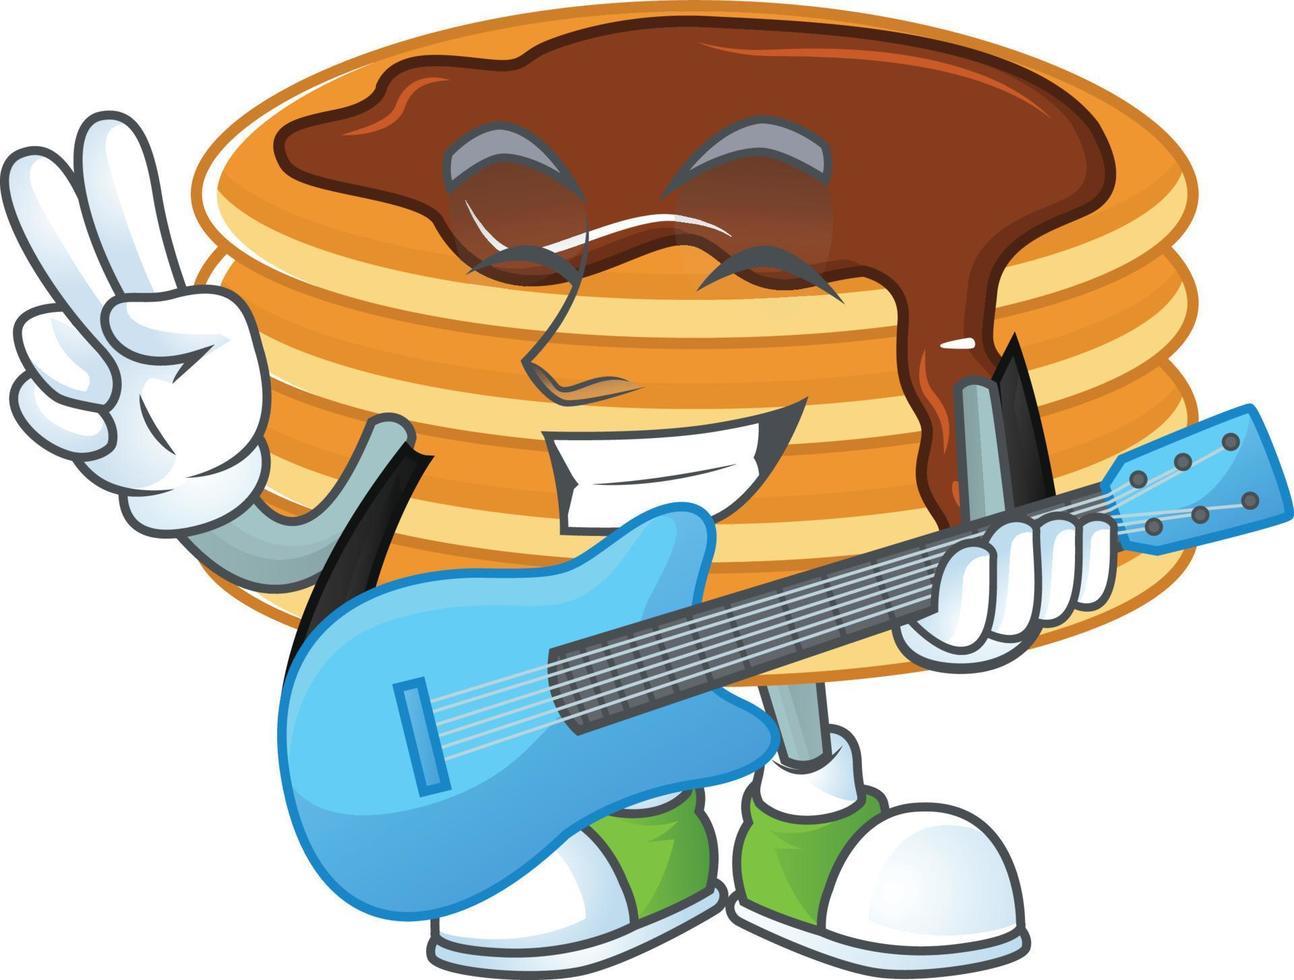 Chocolate cream pancake Cartoon character vector